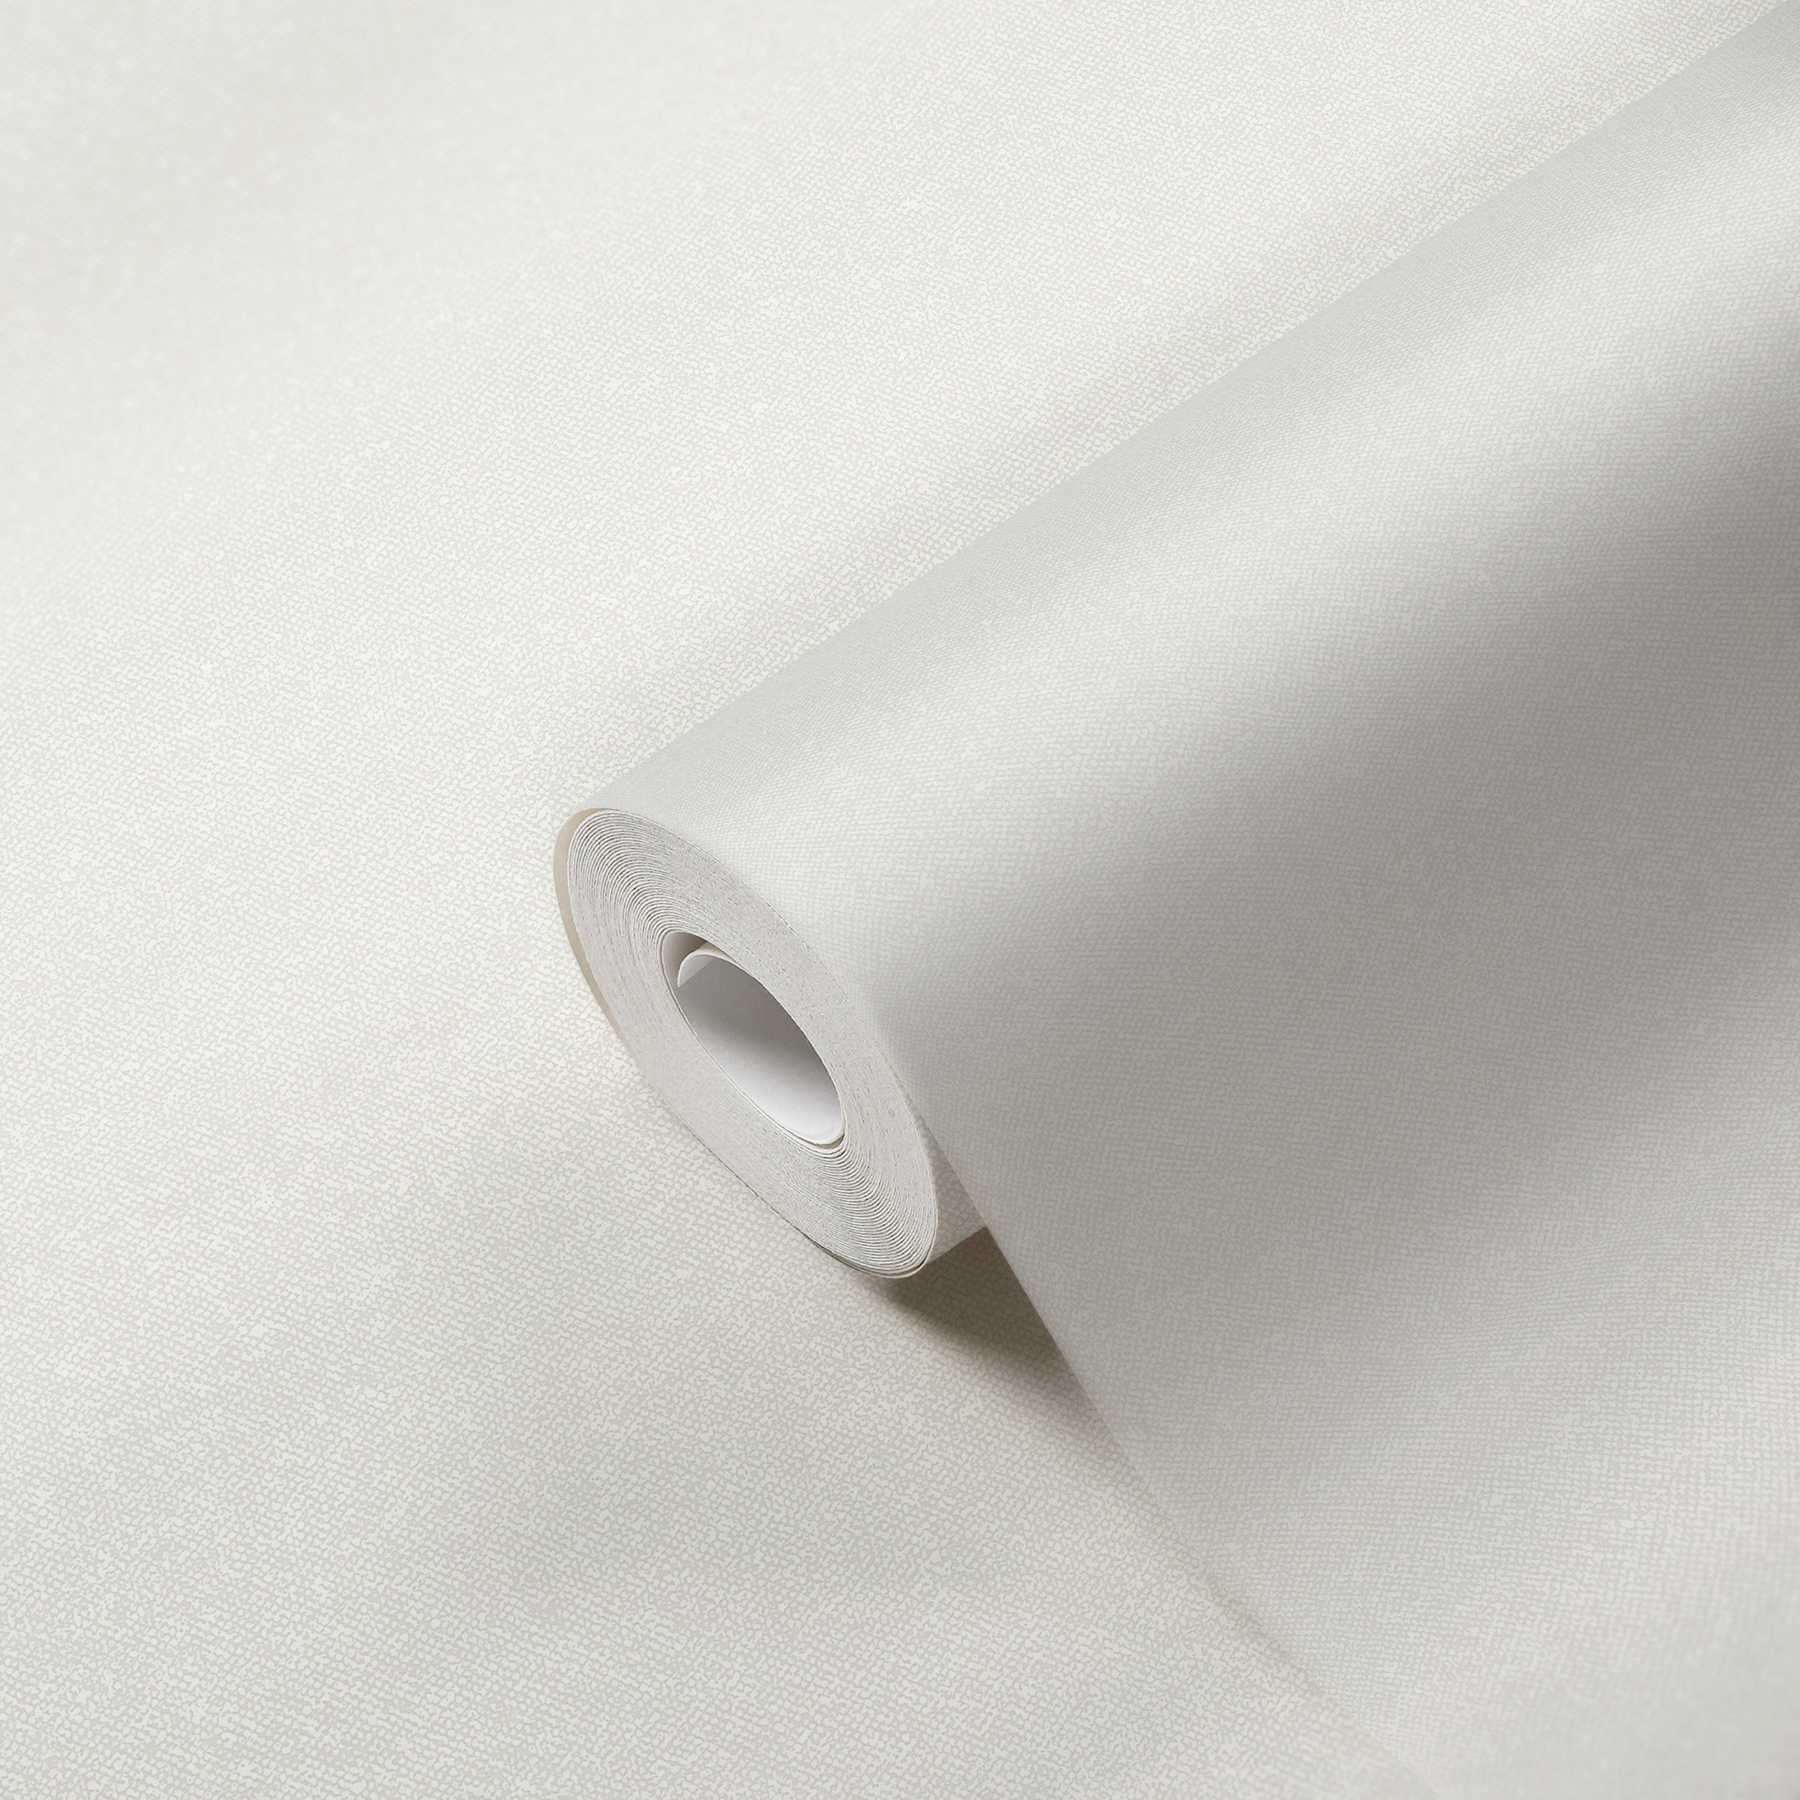             Textile optics wallpaper plain - white, cream
        